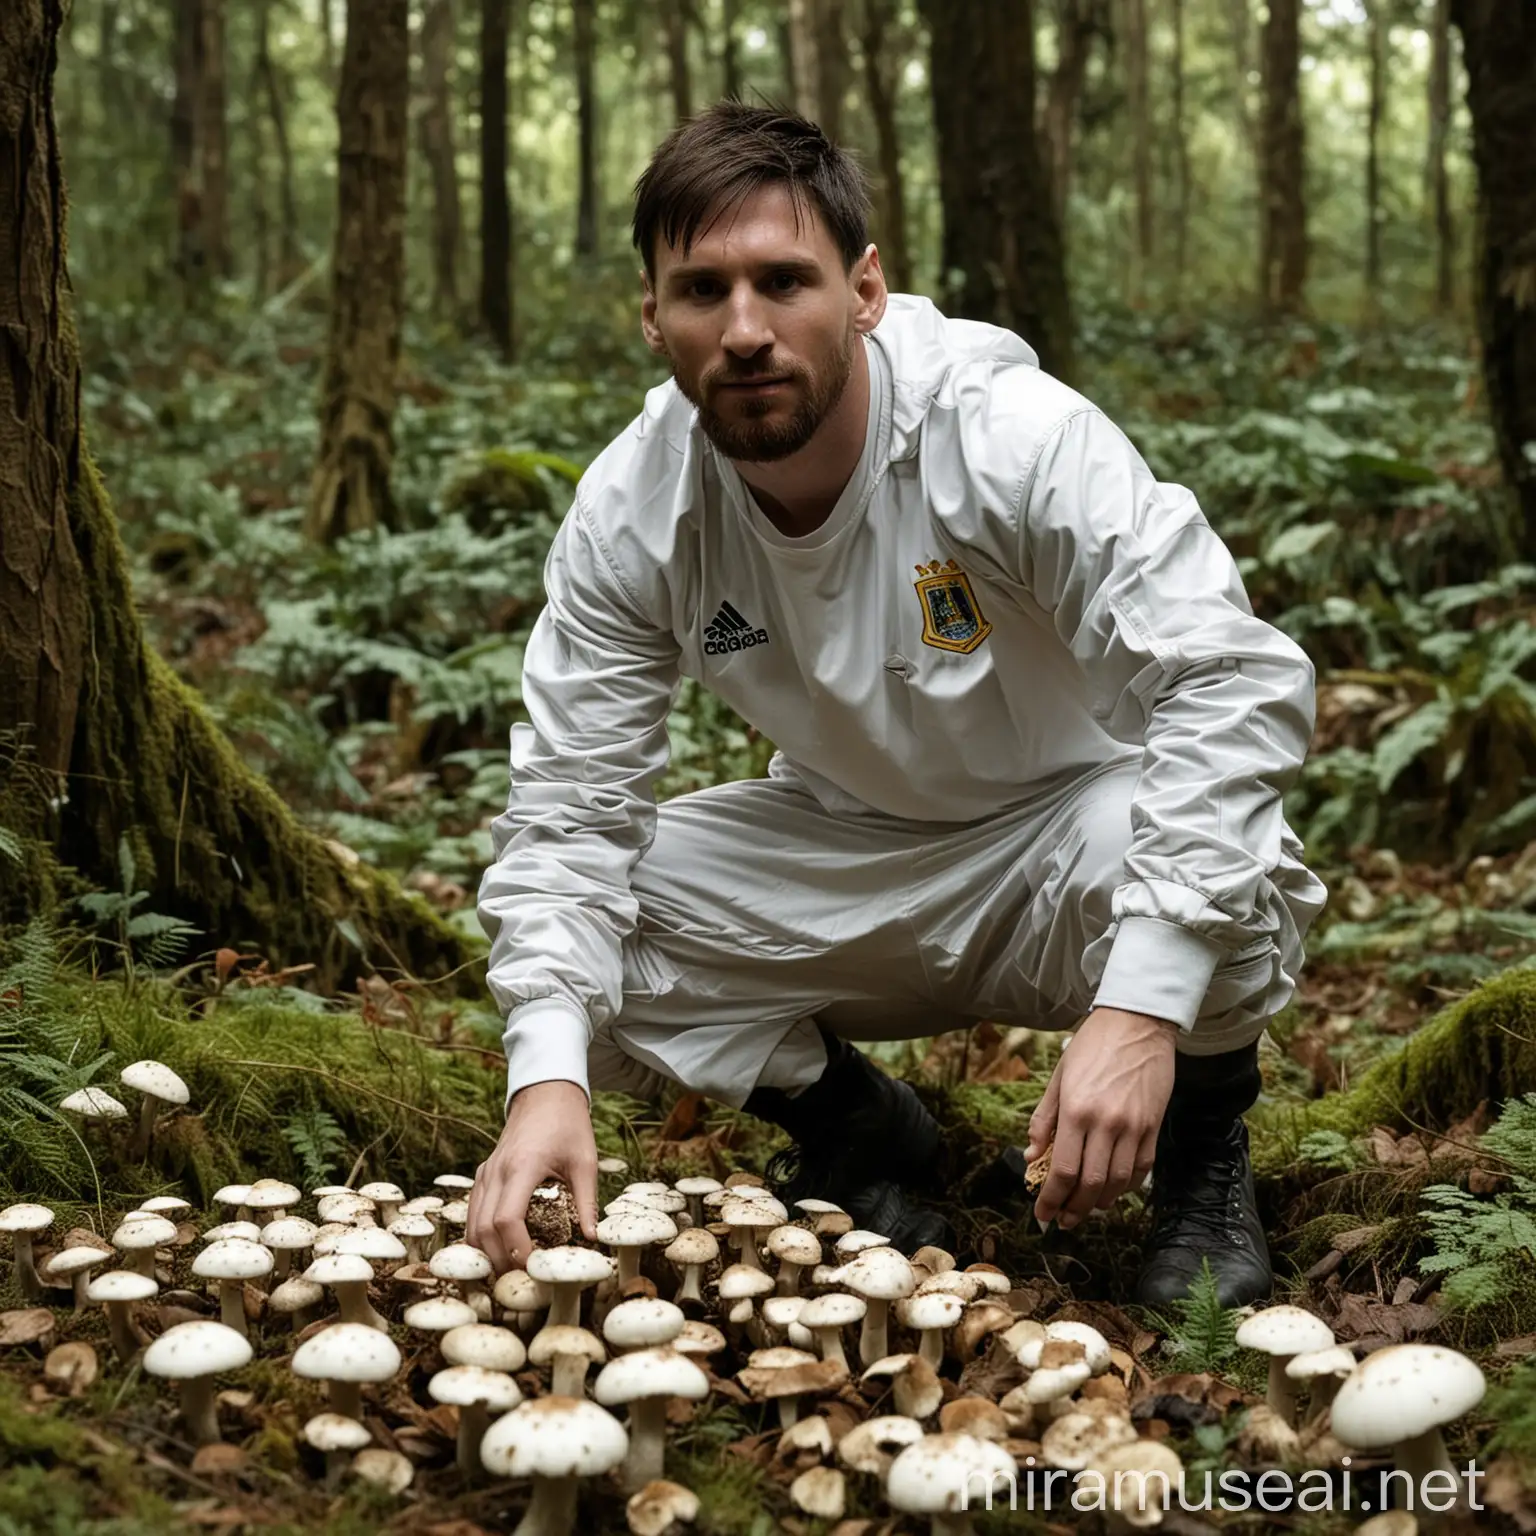 Lionel Messi Argentina Footballer Harvesting Mushrooms in Ancient Rainforest